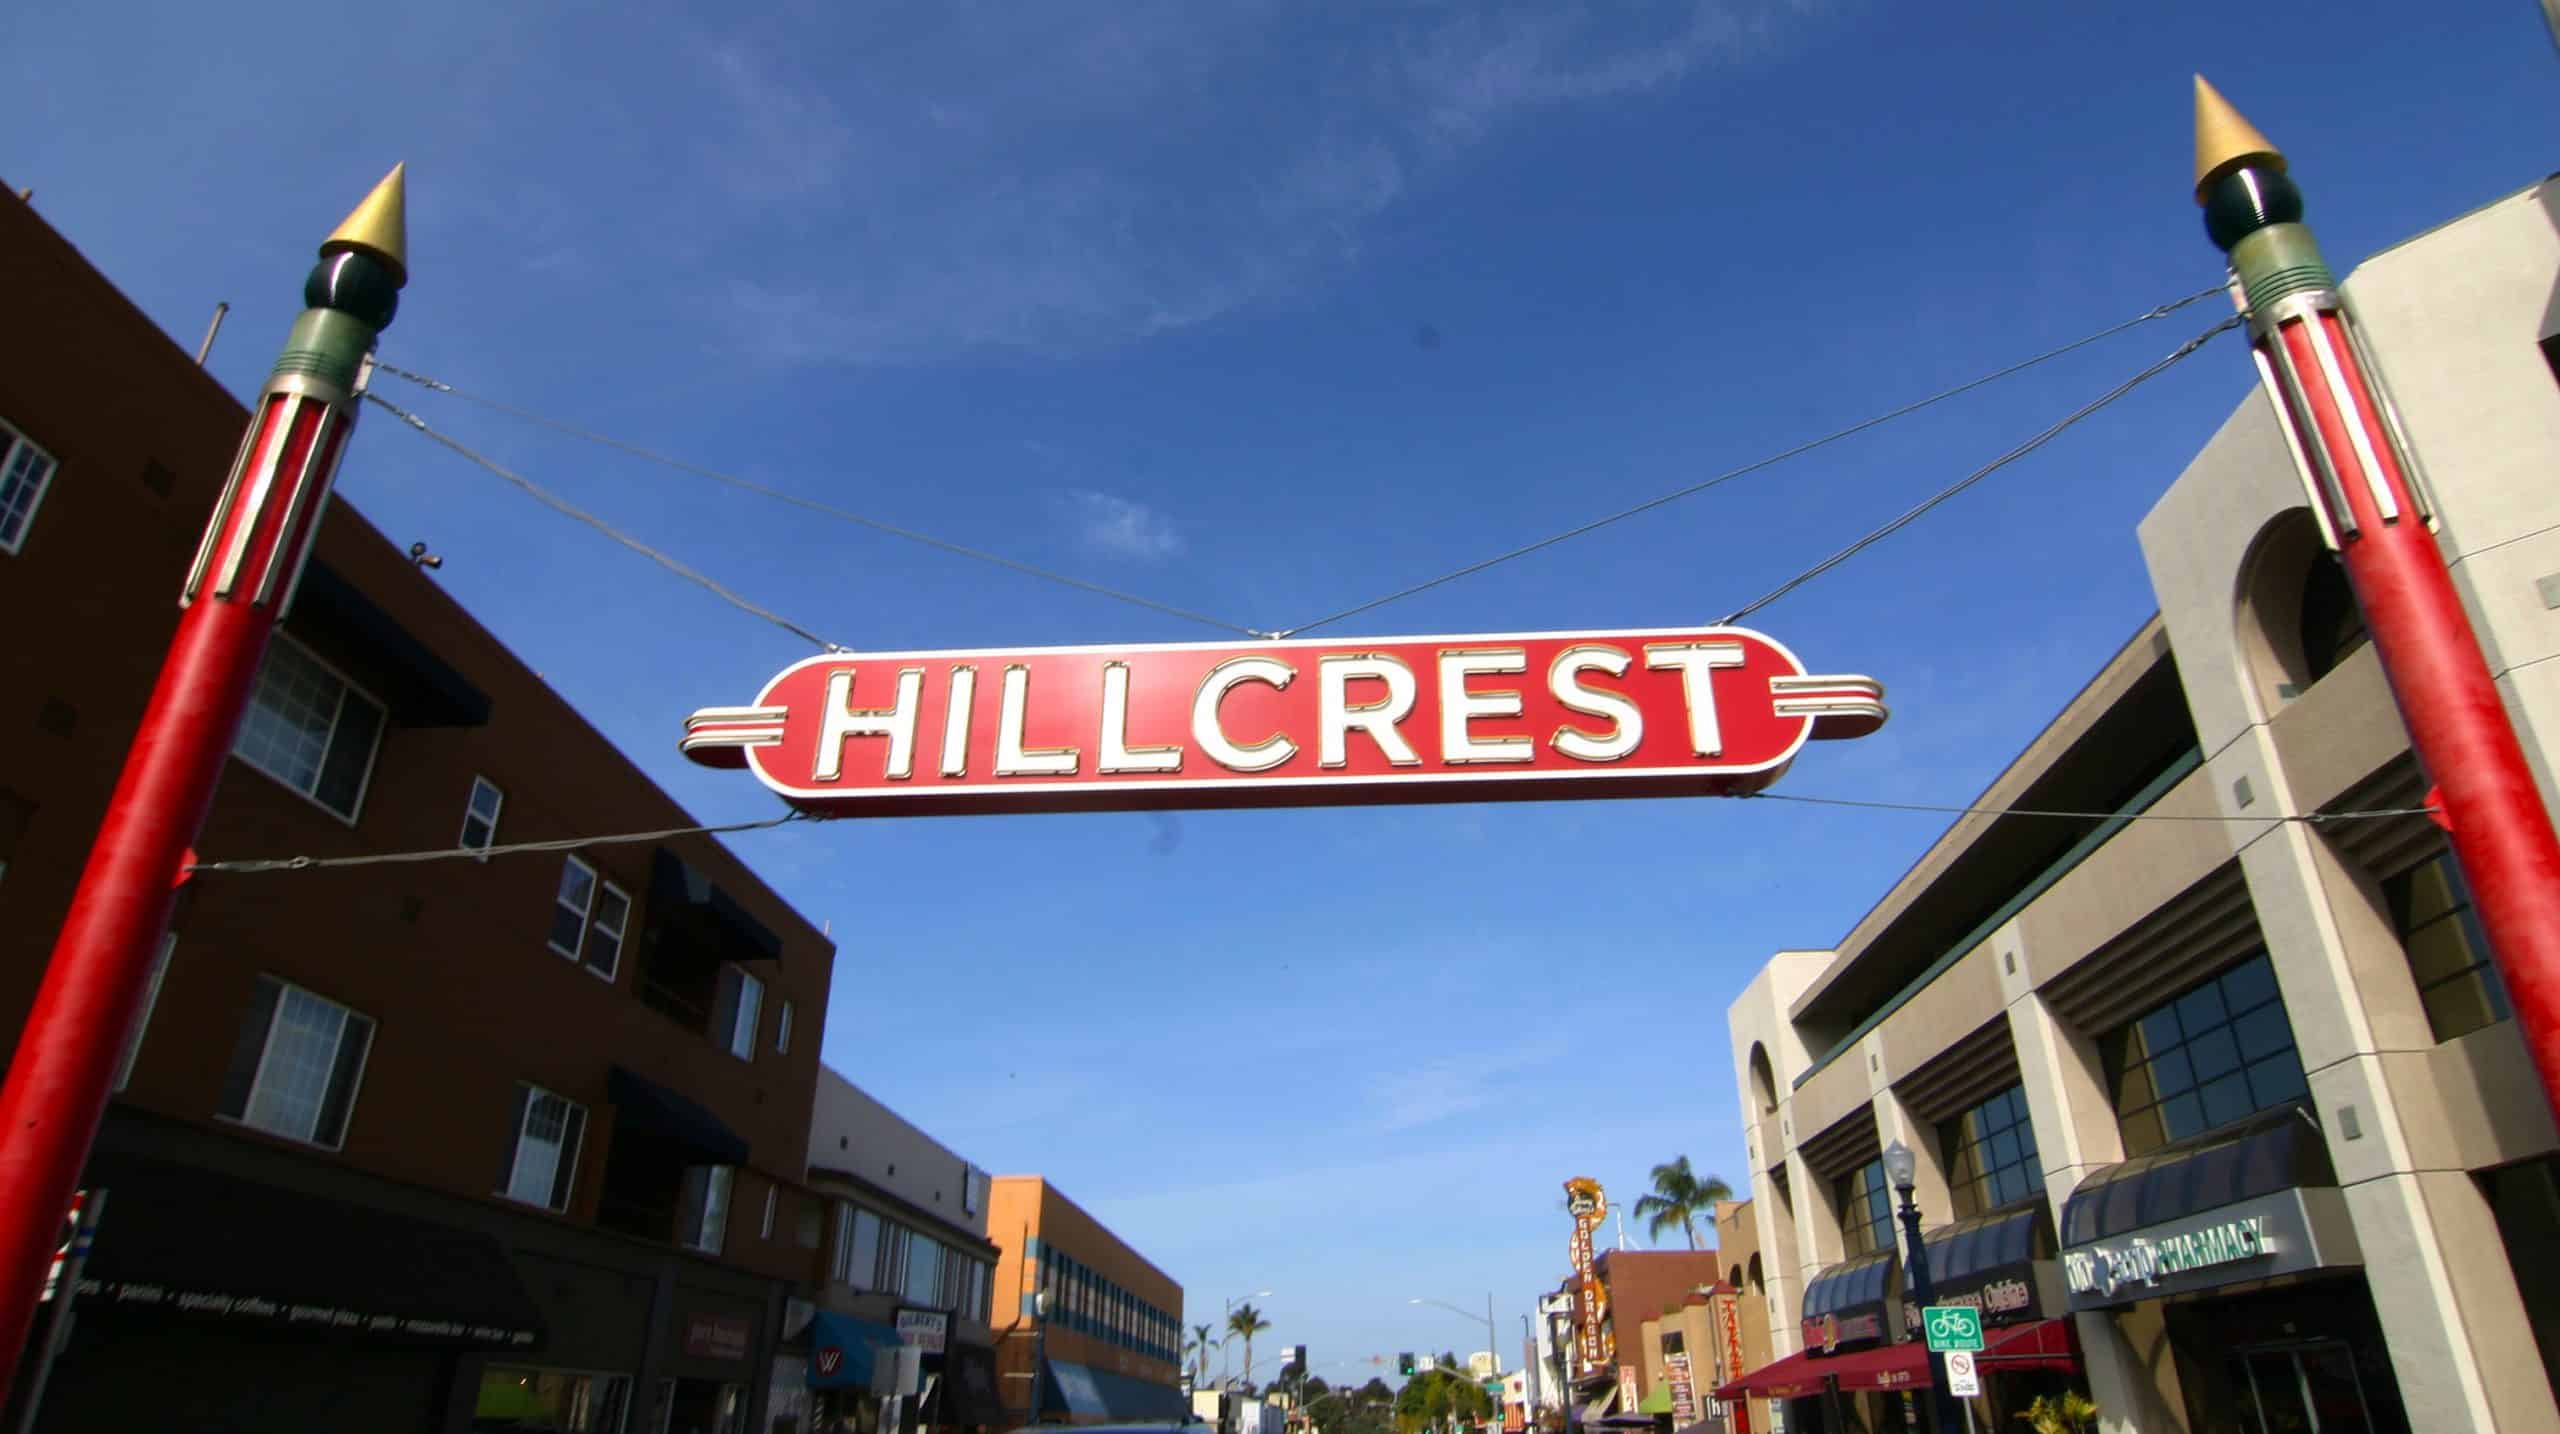 Hillcrest Scaled Hillcrest